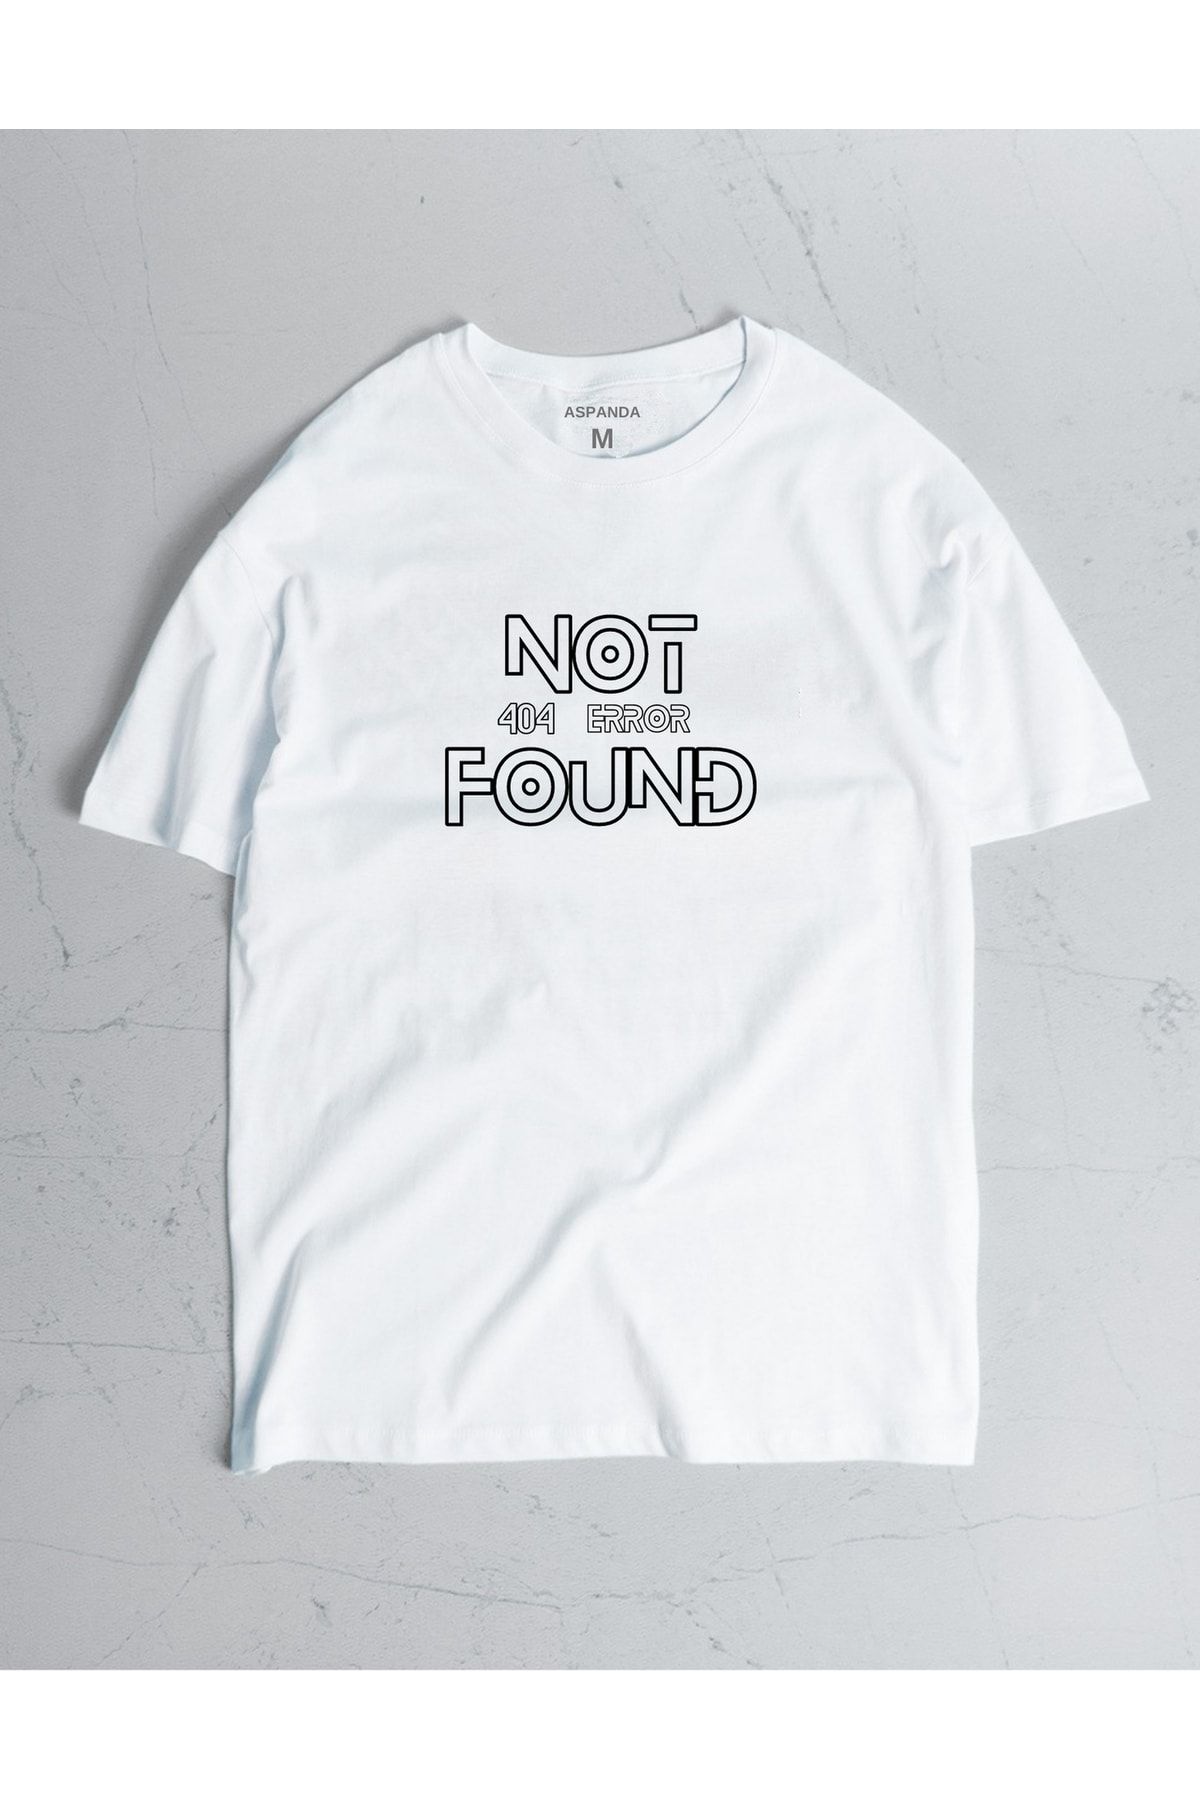 LEGION 404 Not Found Baskılı Oversize T-shirt